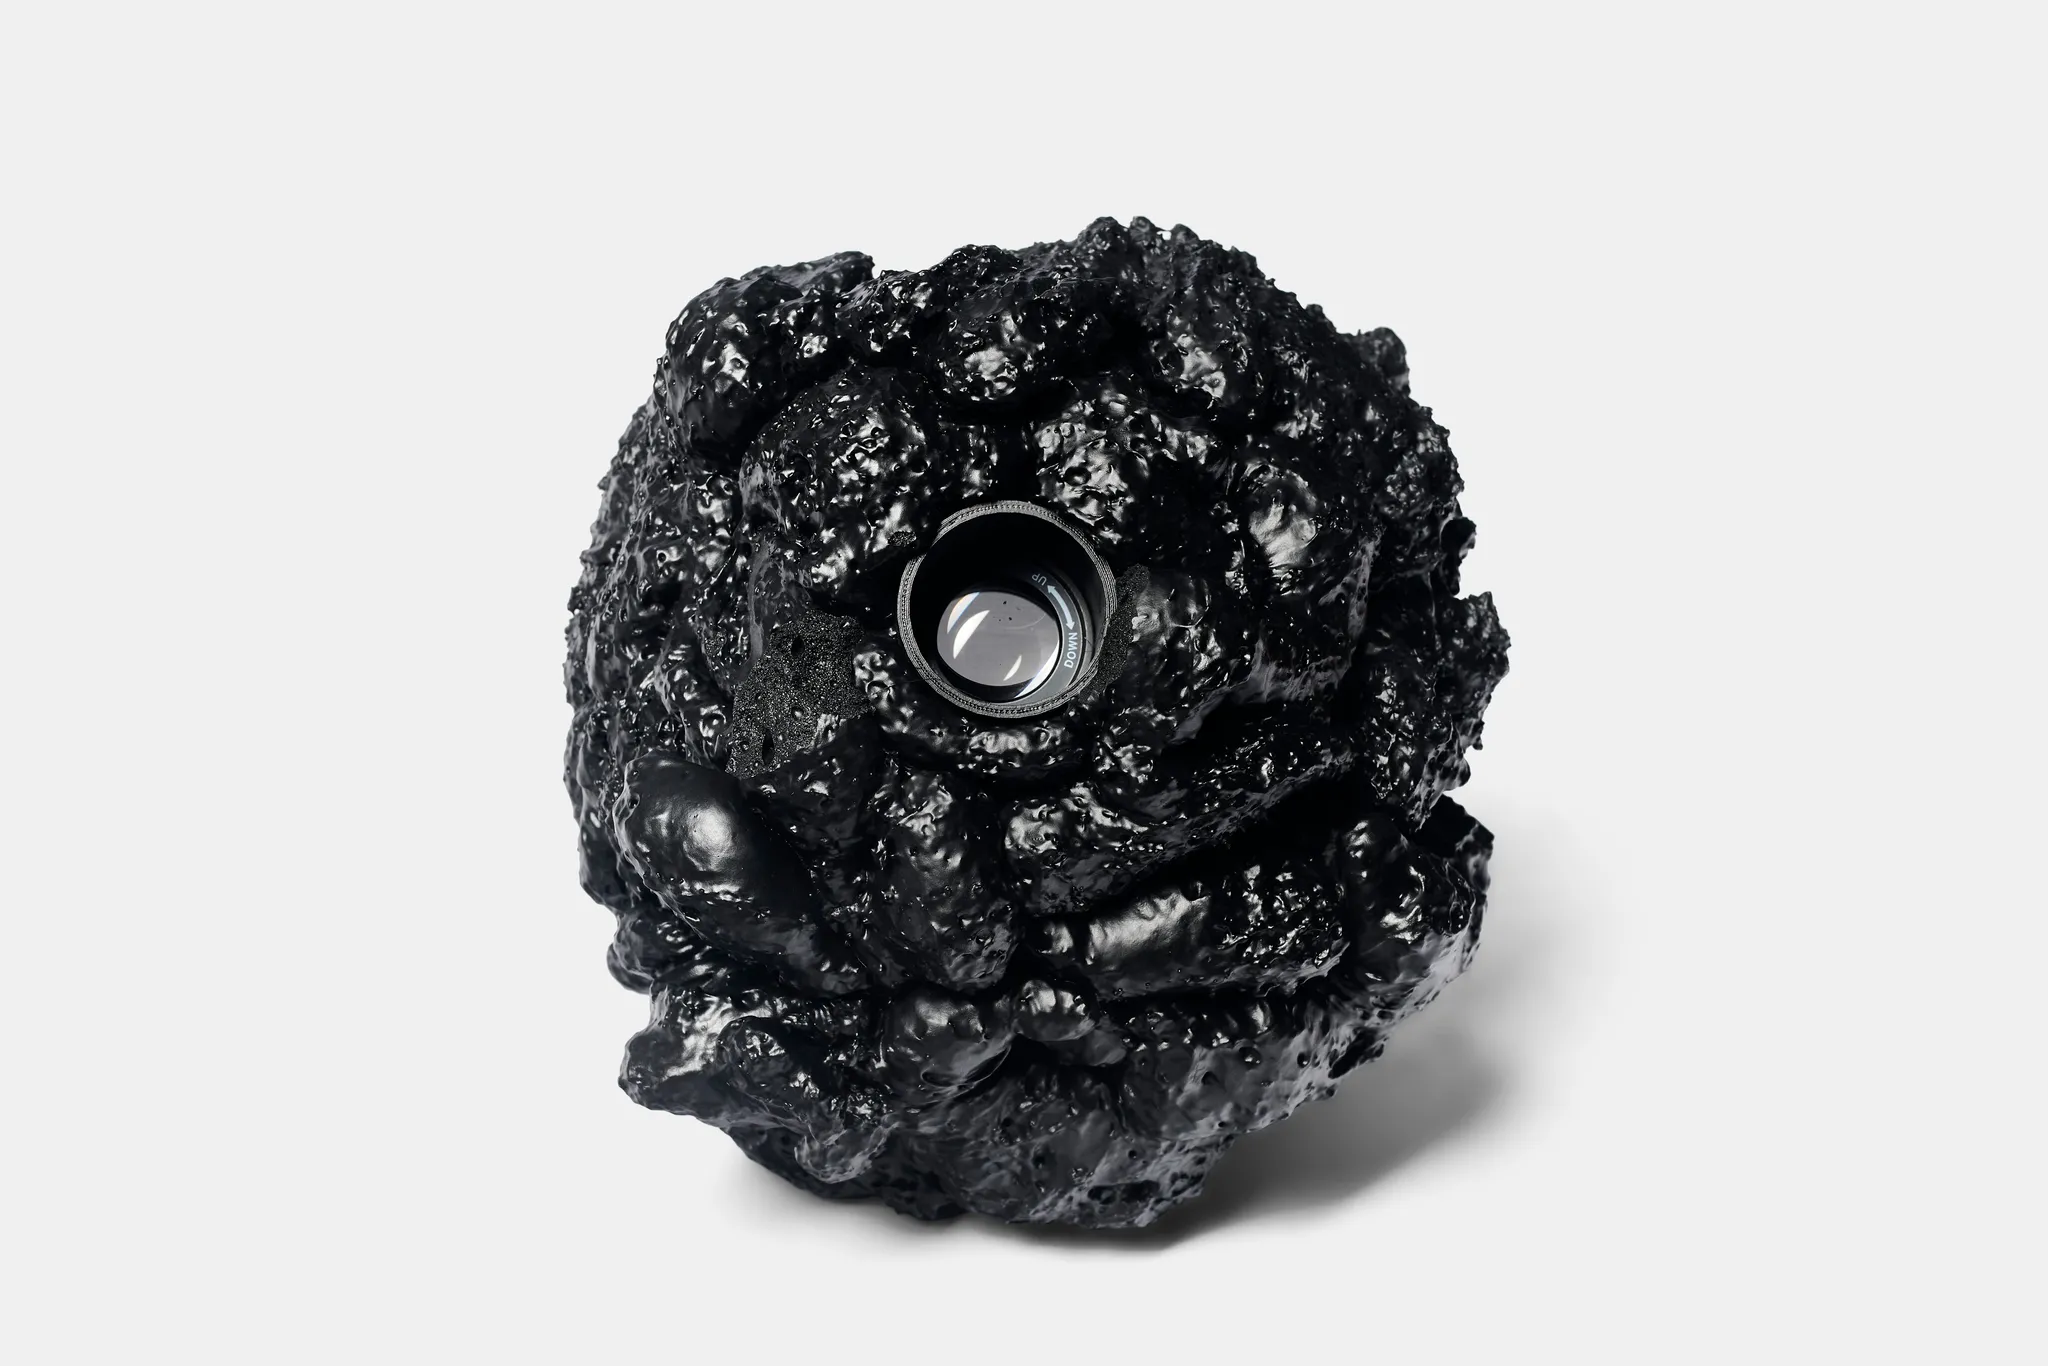 A shiny black rock with a lens inside